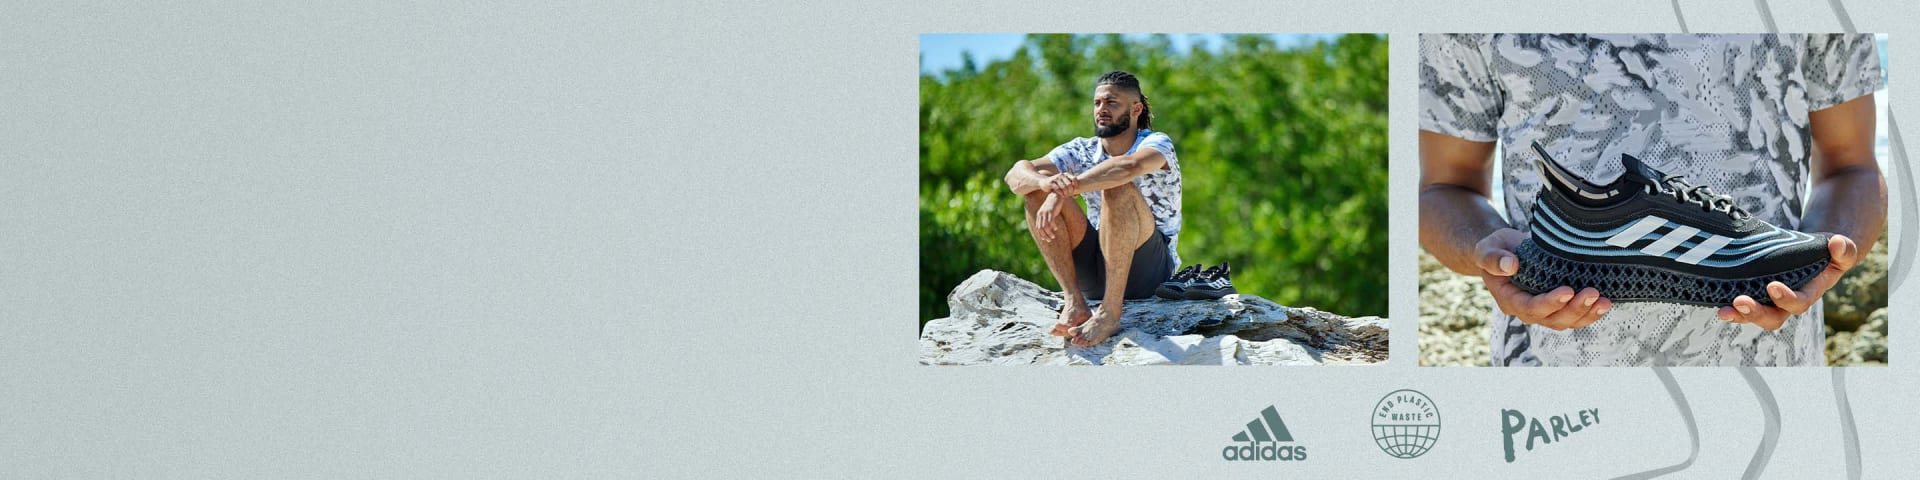 Dual image: Fernando Tatís Jr. (Pro baseball player) sitting on beach with Parley shoes. Fernando holding Parley shoe.